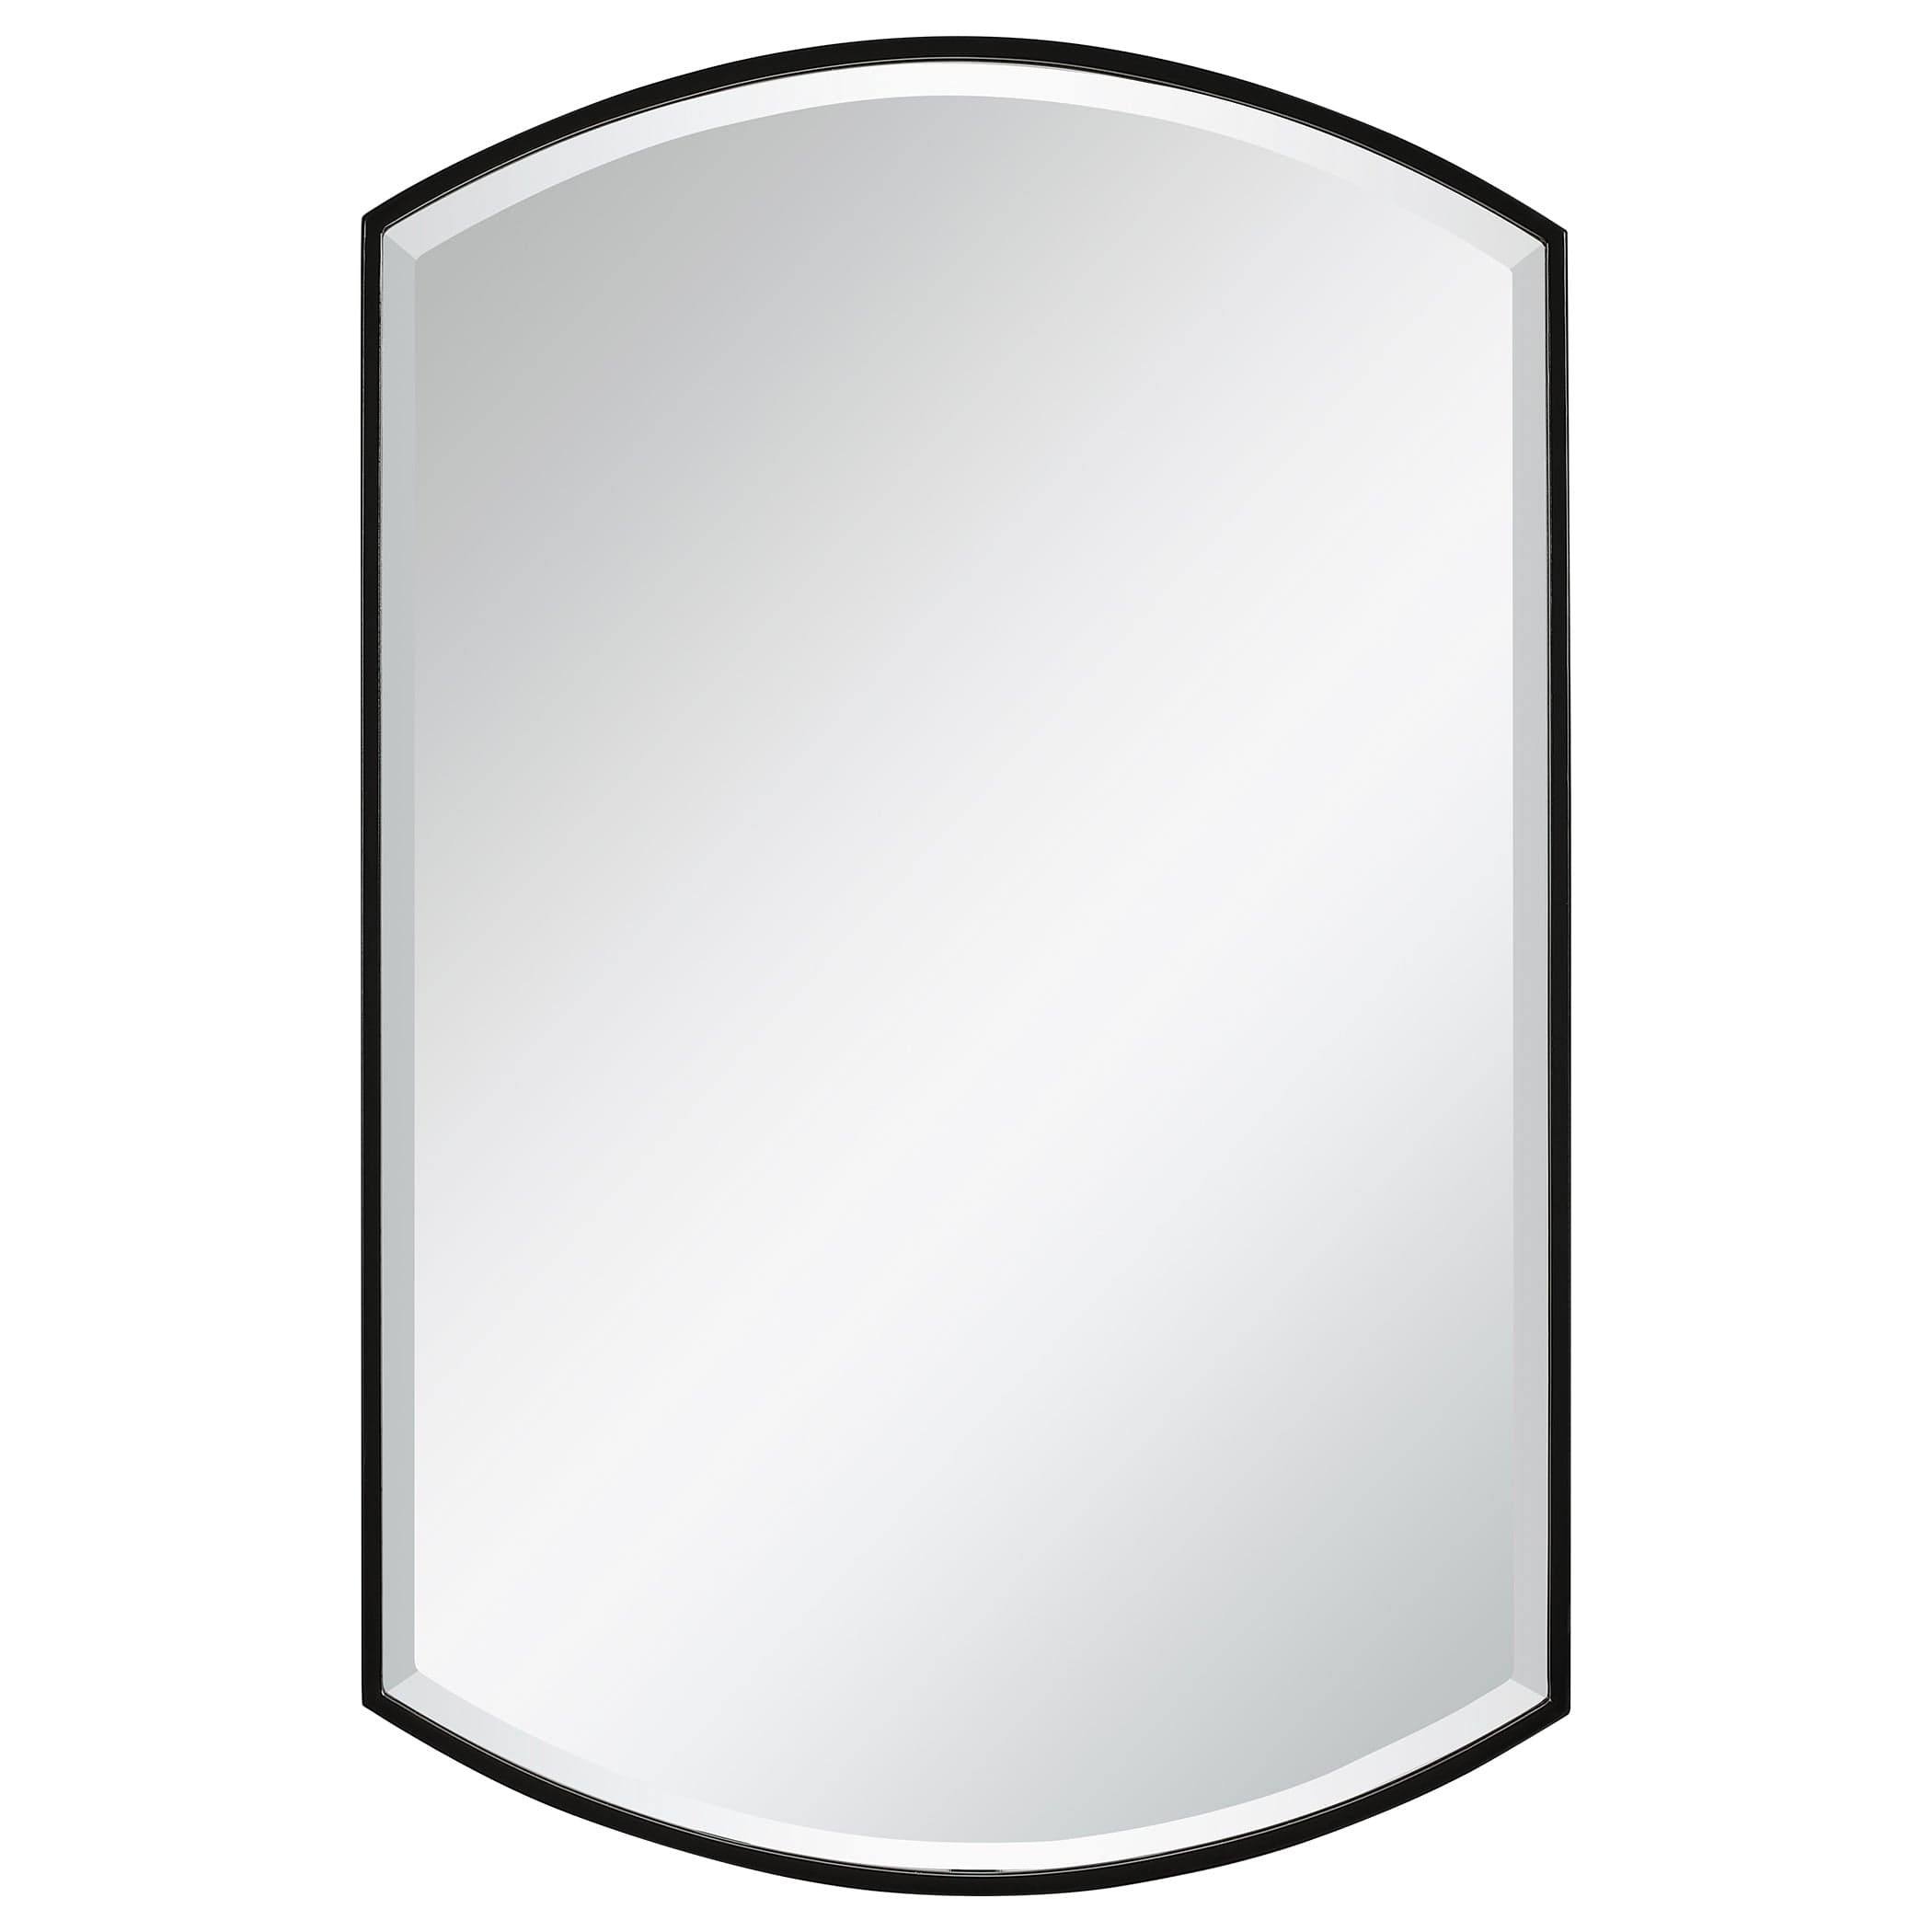 Shield Shaped Iron Mirror Uttermost